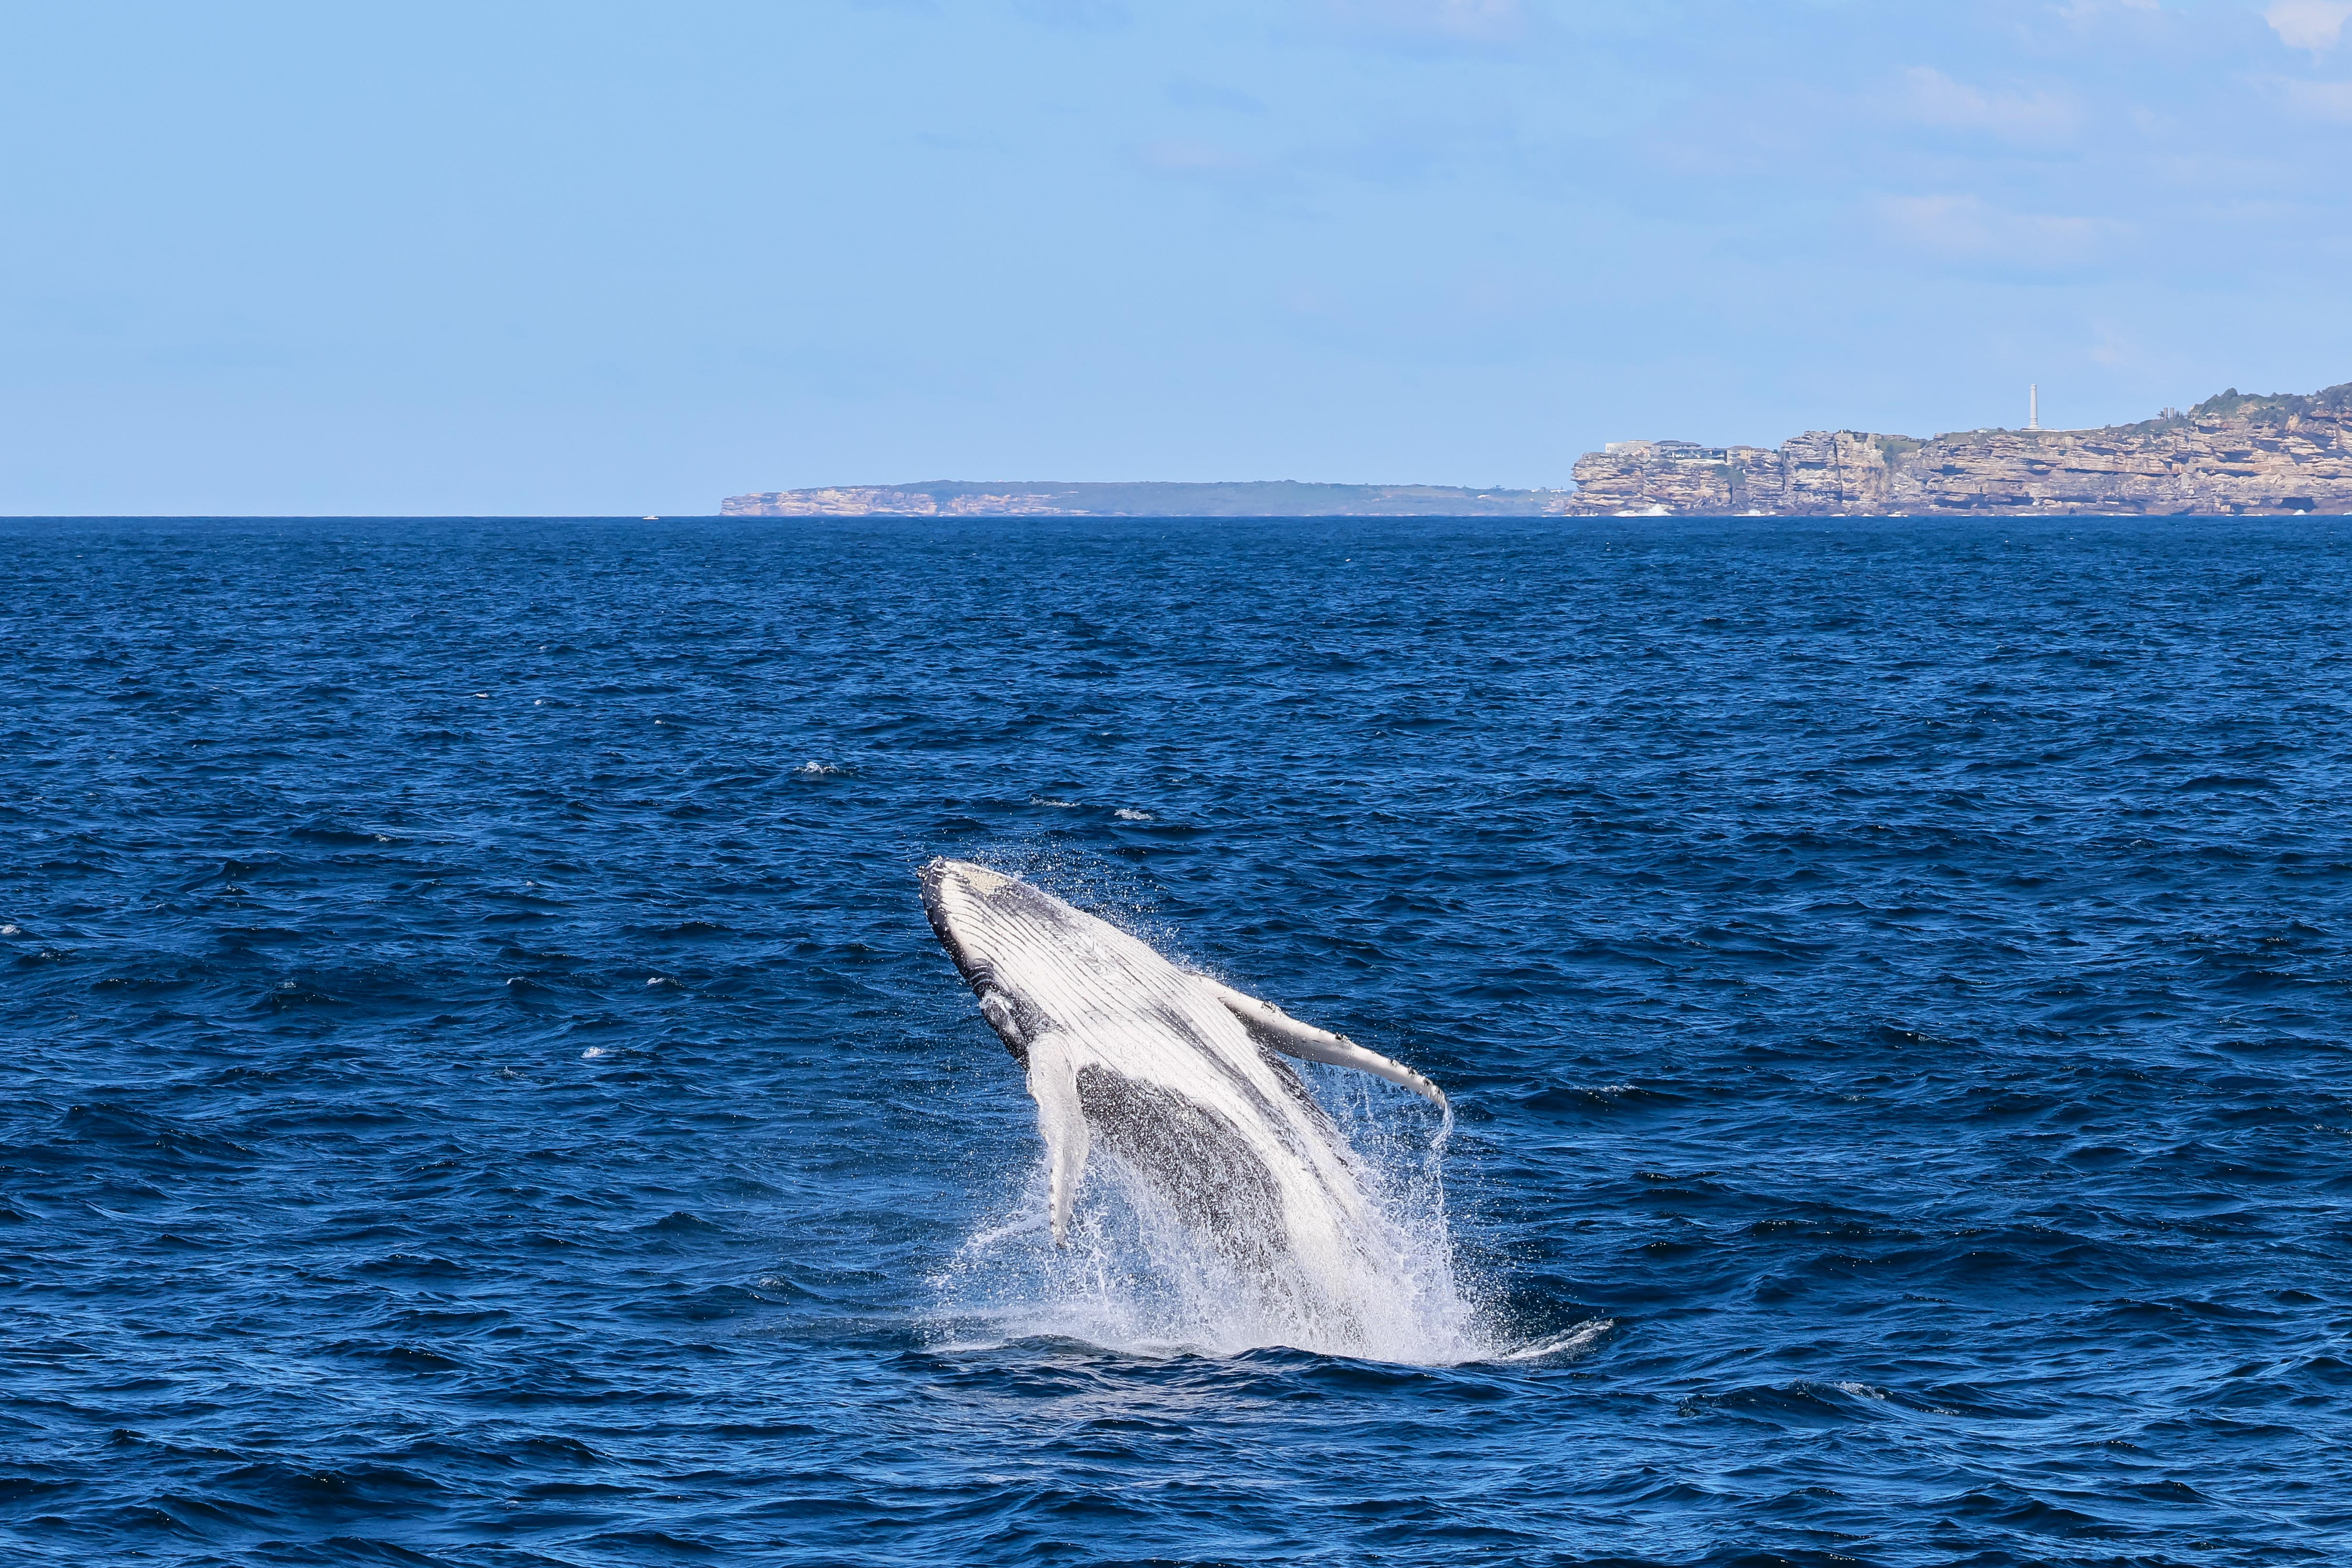 A humpback whale calf is breaching the ocean.